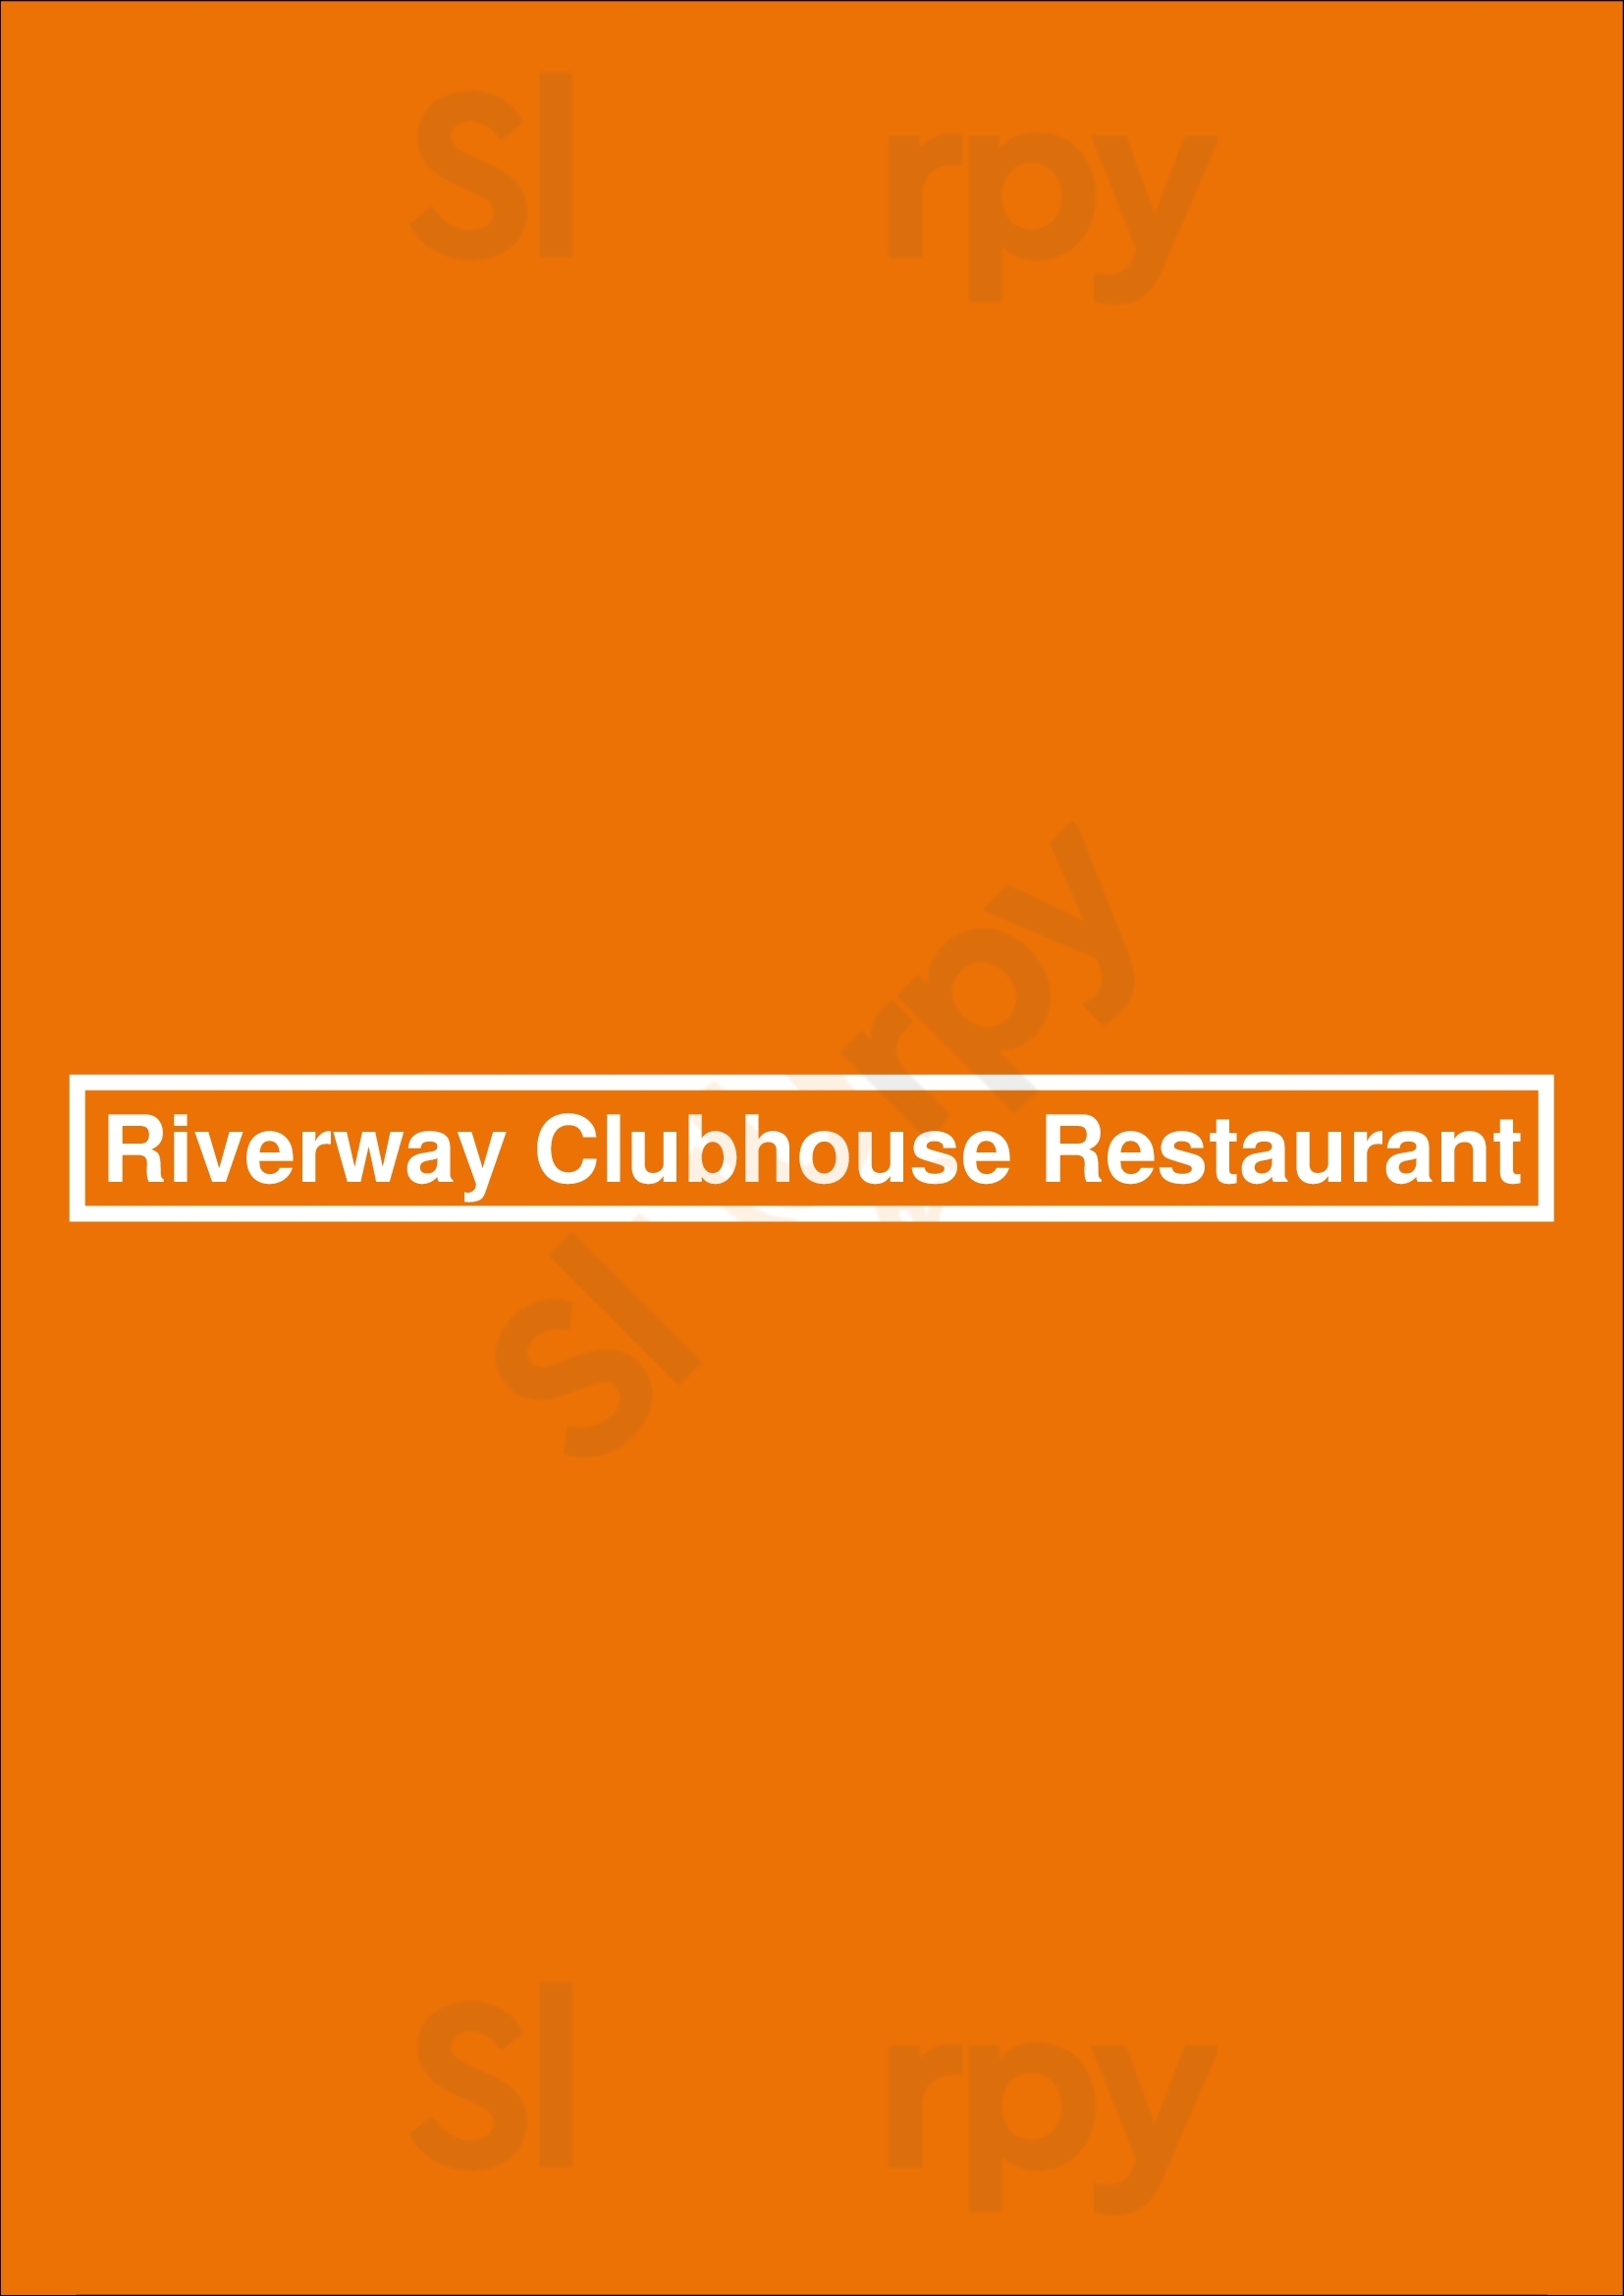 Riverway Clubhouse Restaurant Burnaby Menu - 1